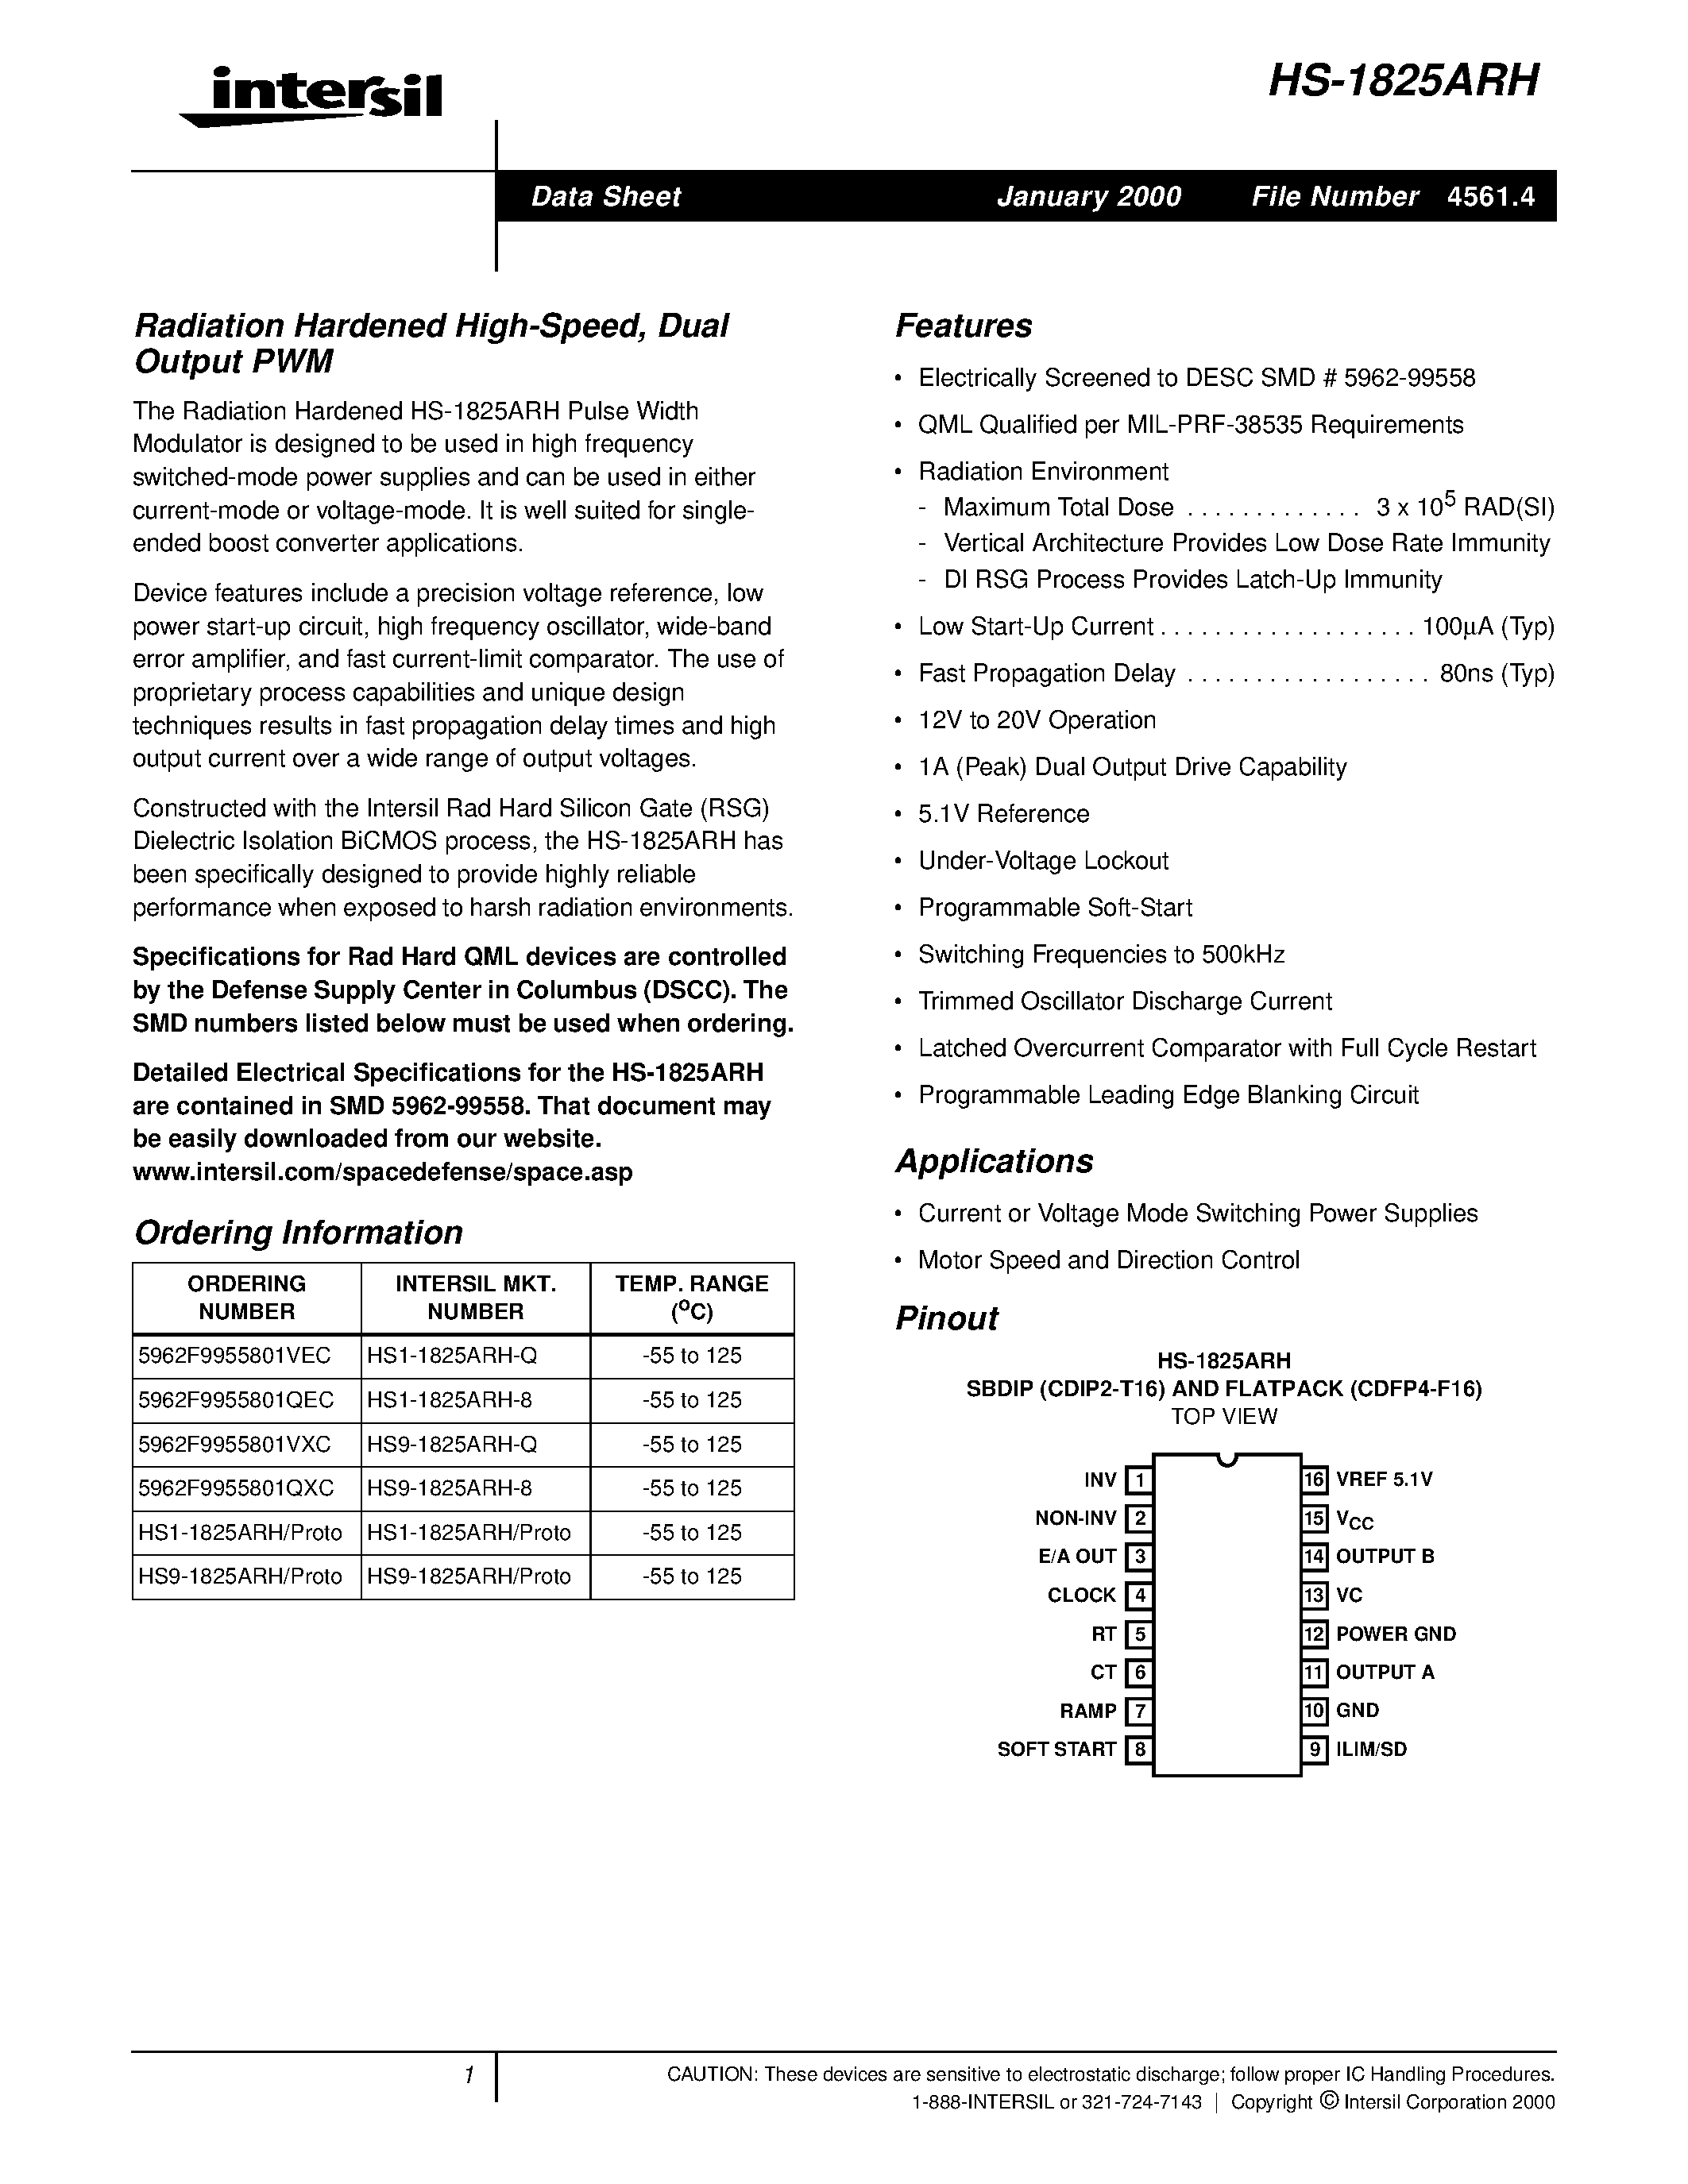 Даташит HS1-1825ARH-Q - Radiation Hardened High-Speed/ Dual Output PWM страница 1